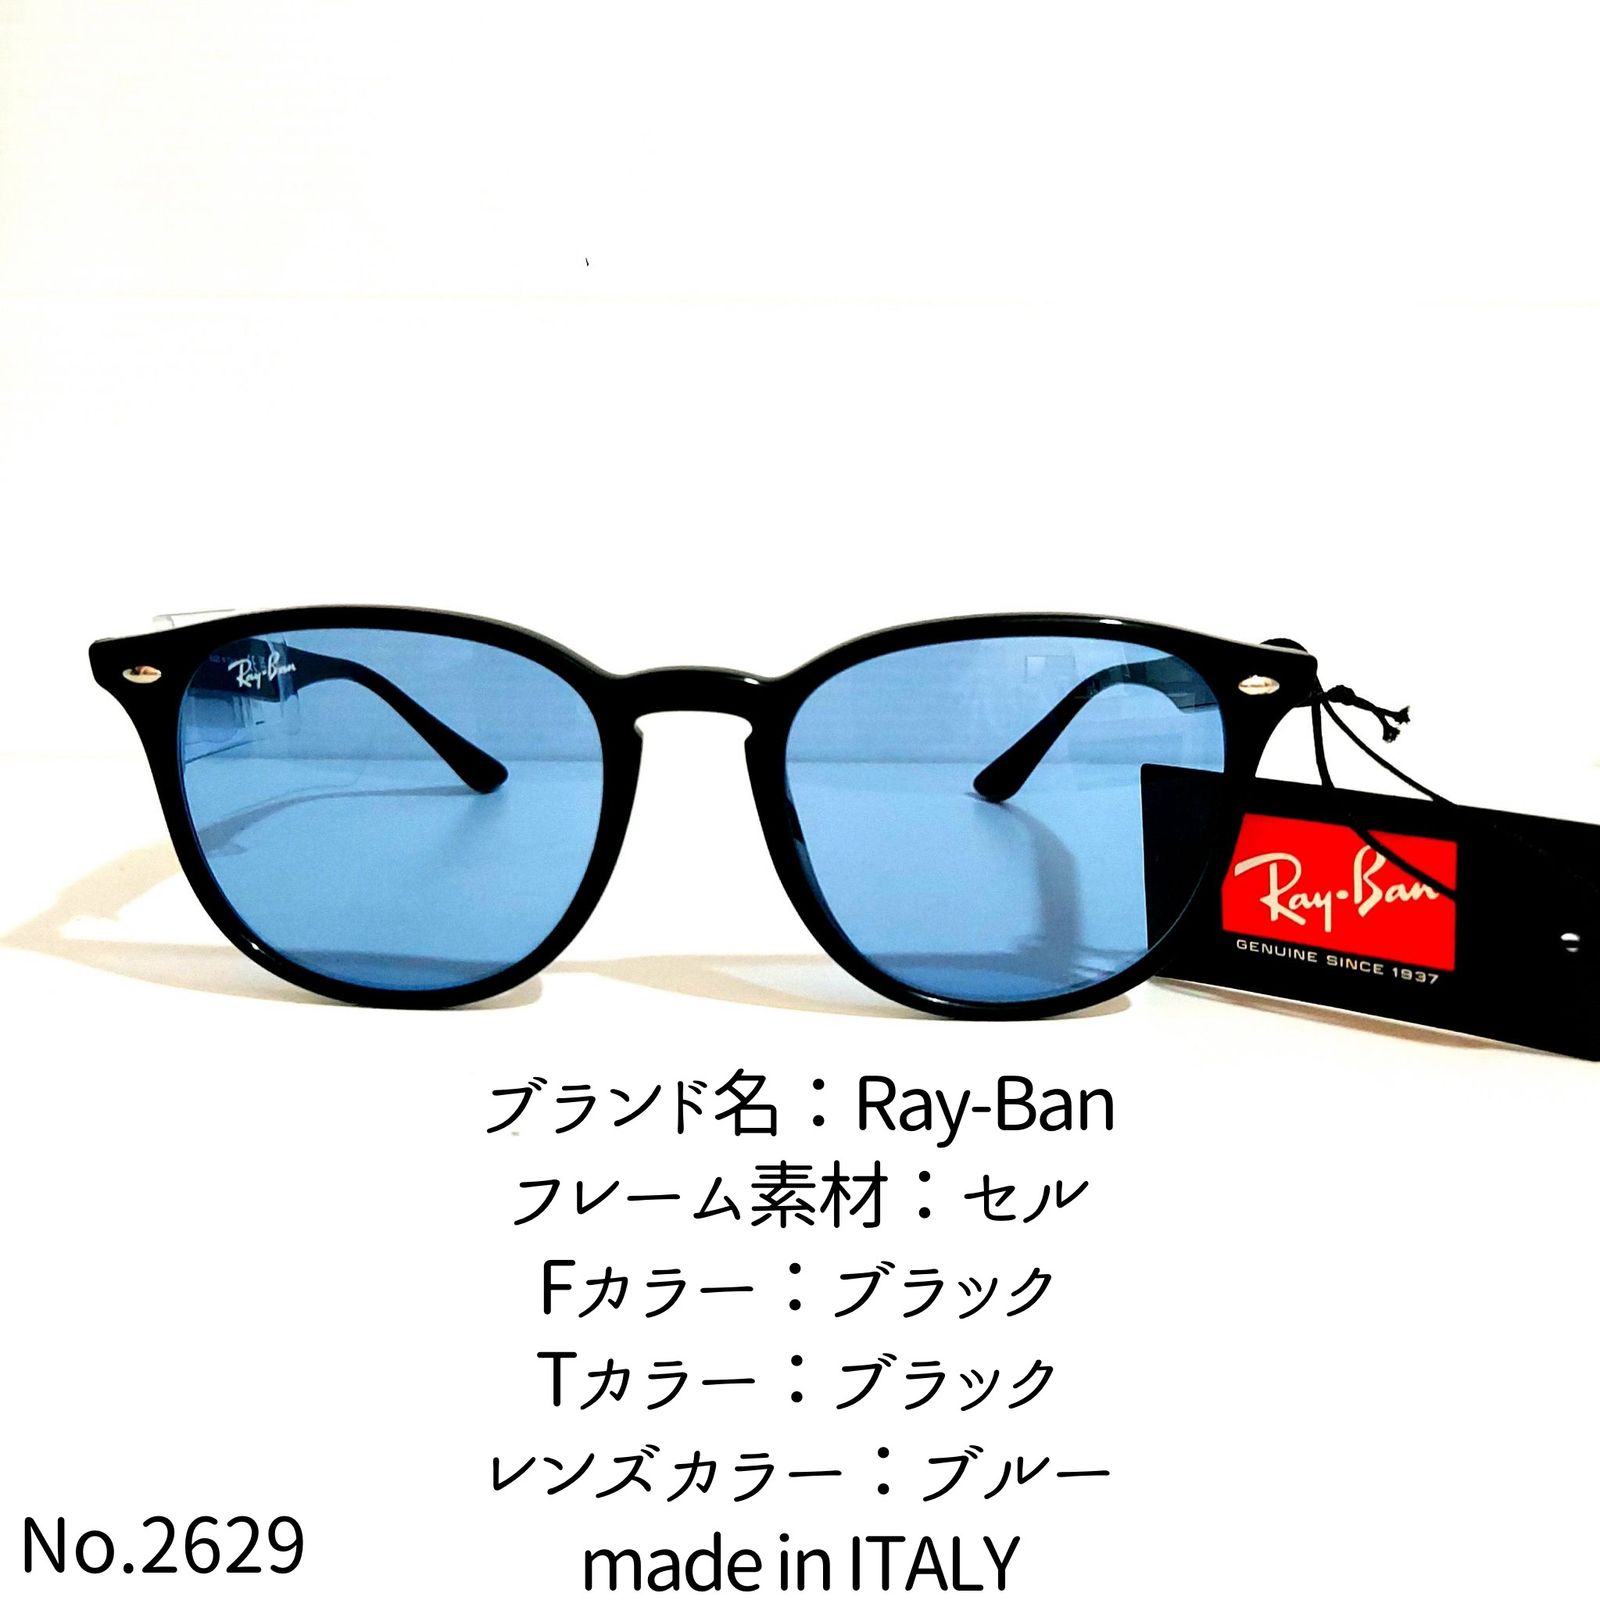 No.2629-メガネ Ray-Ban【フレームのみ価格】 - メルカリ